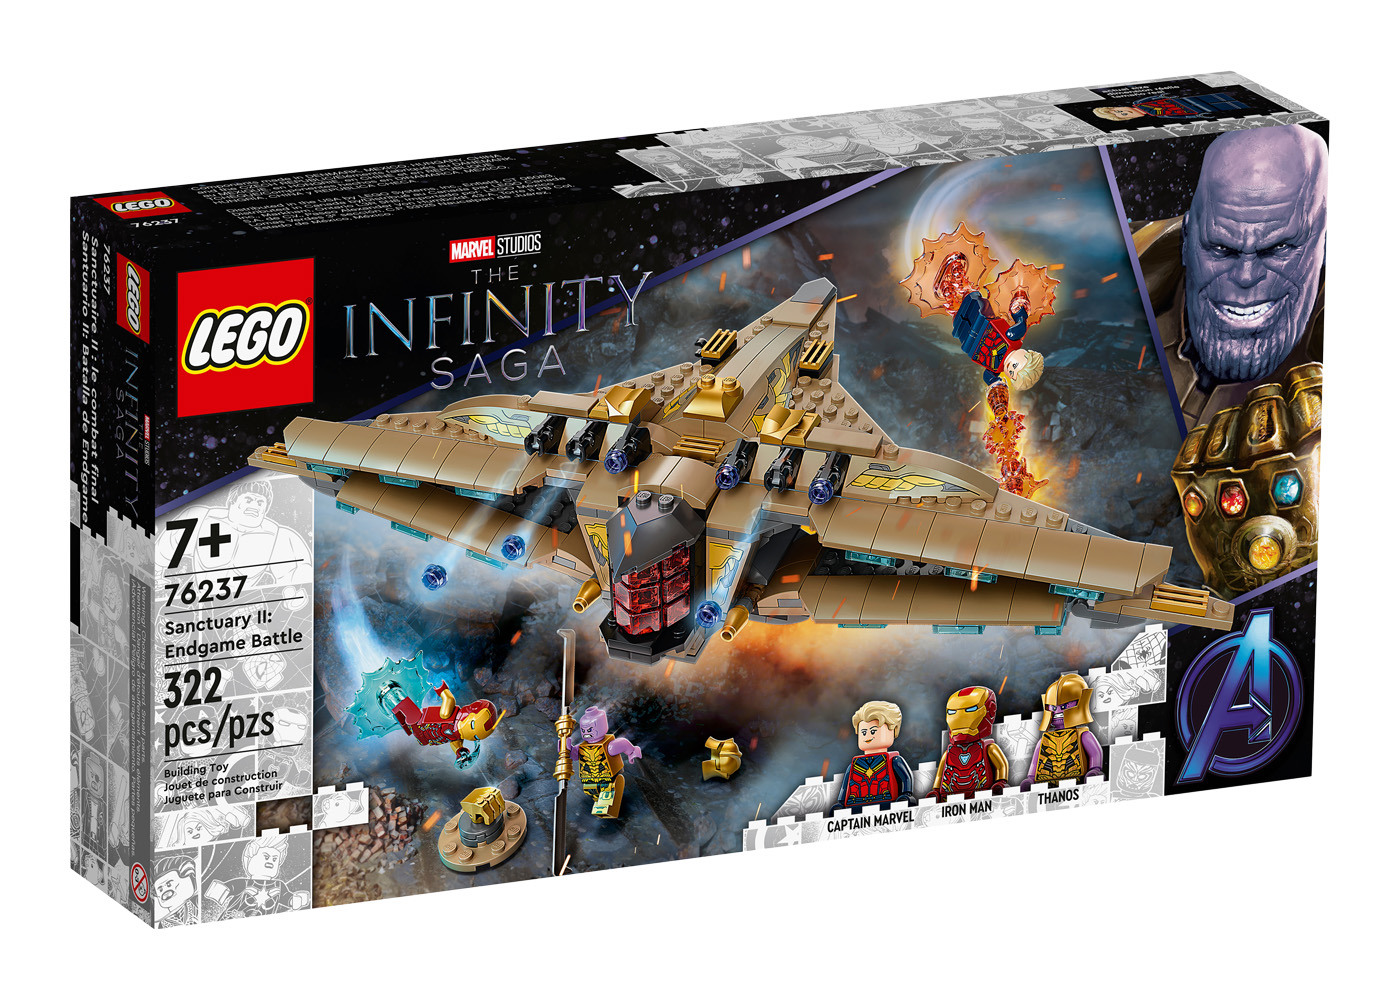 LEGO Marvel Studios The Infinity Saga Sanctuary II: Endgame Battle 